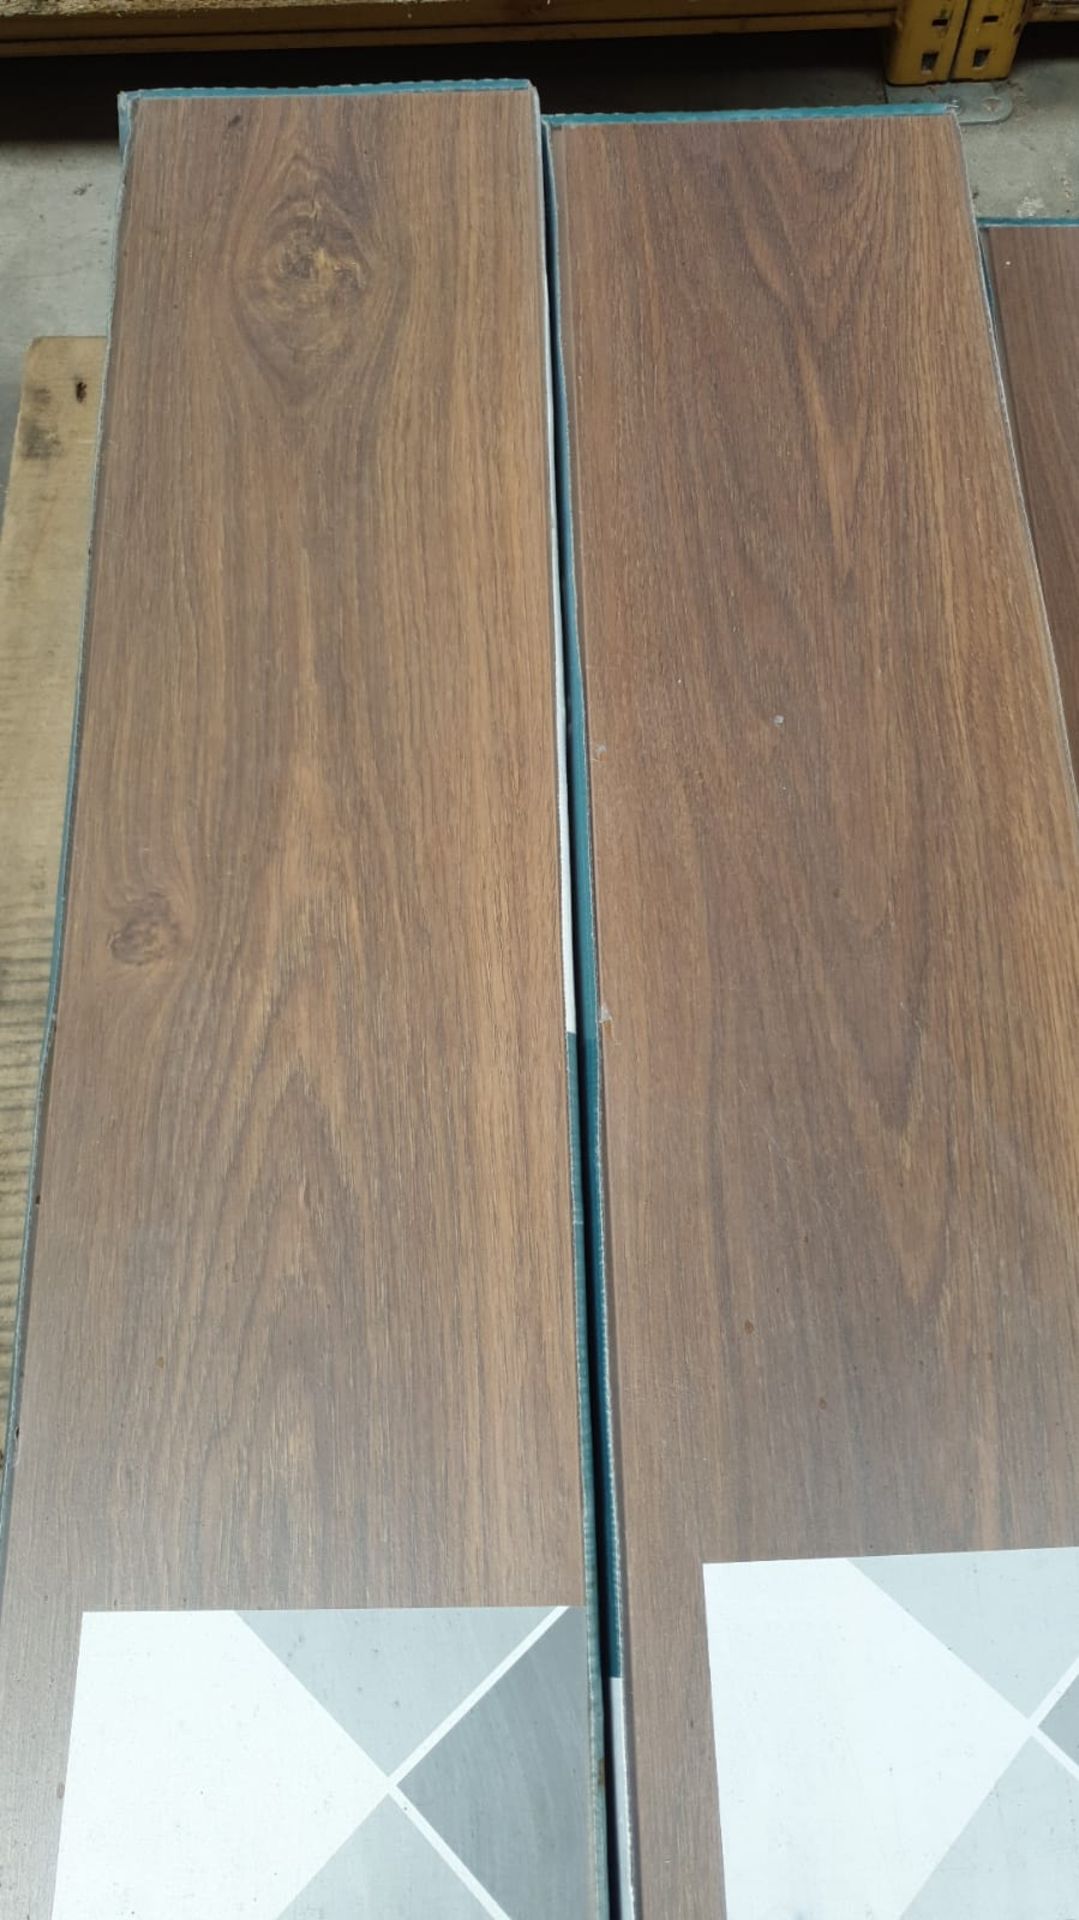 8mm Smoked Oak Laminate Flooring - Image 2 of 2